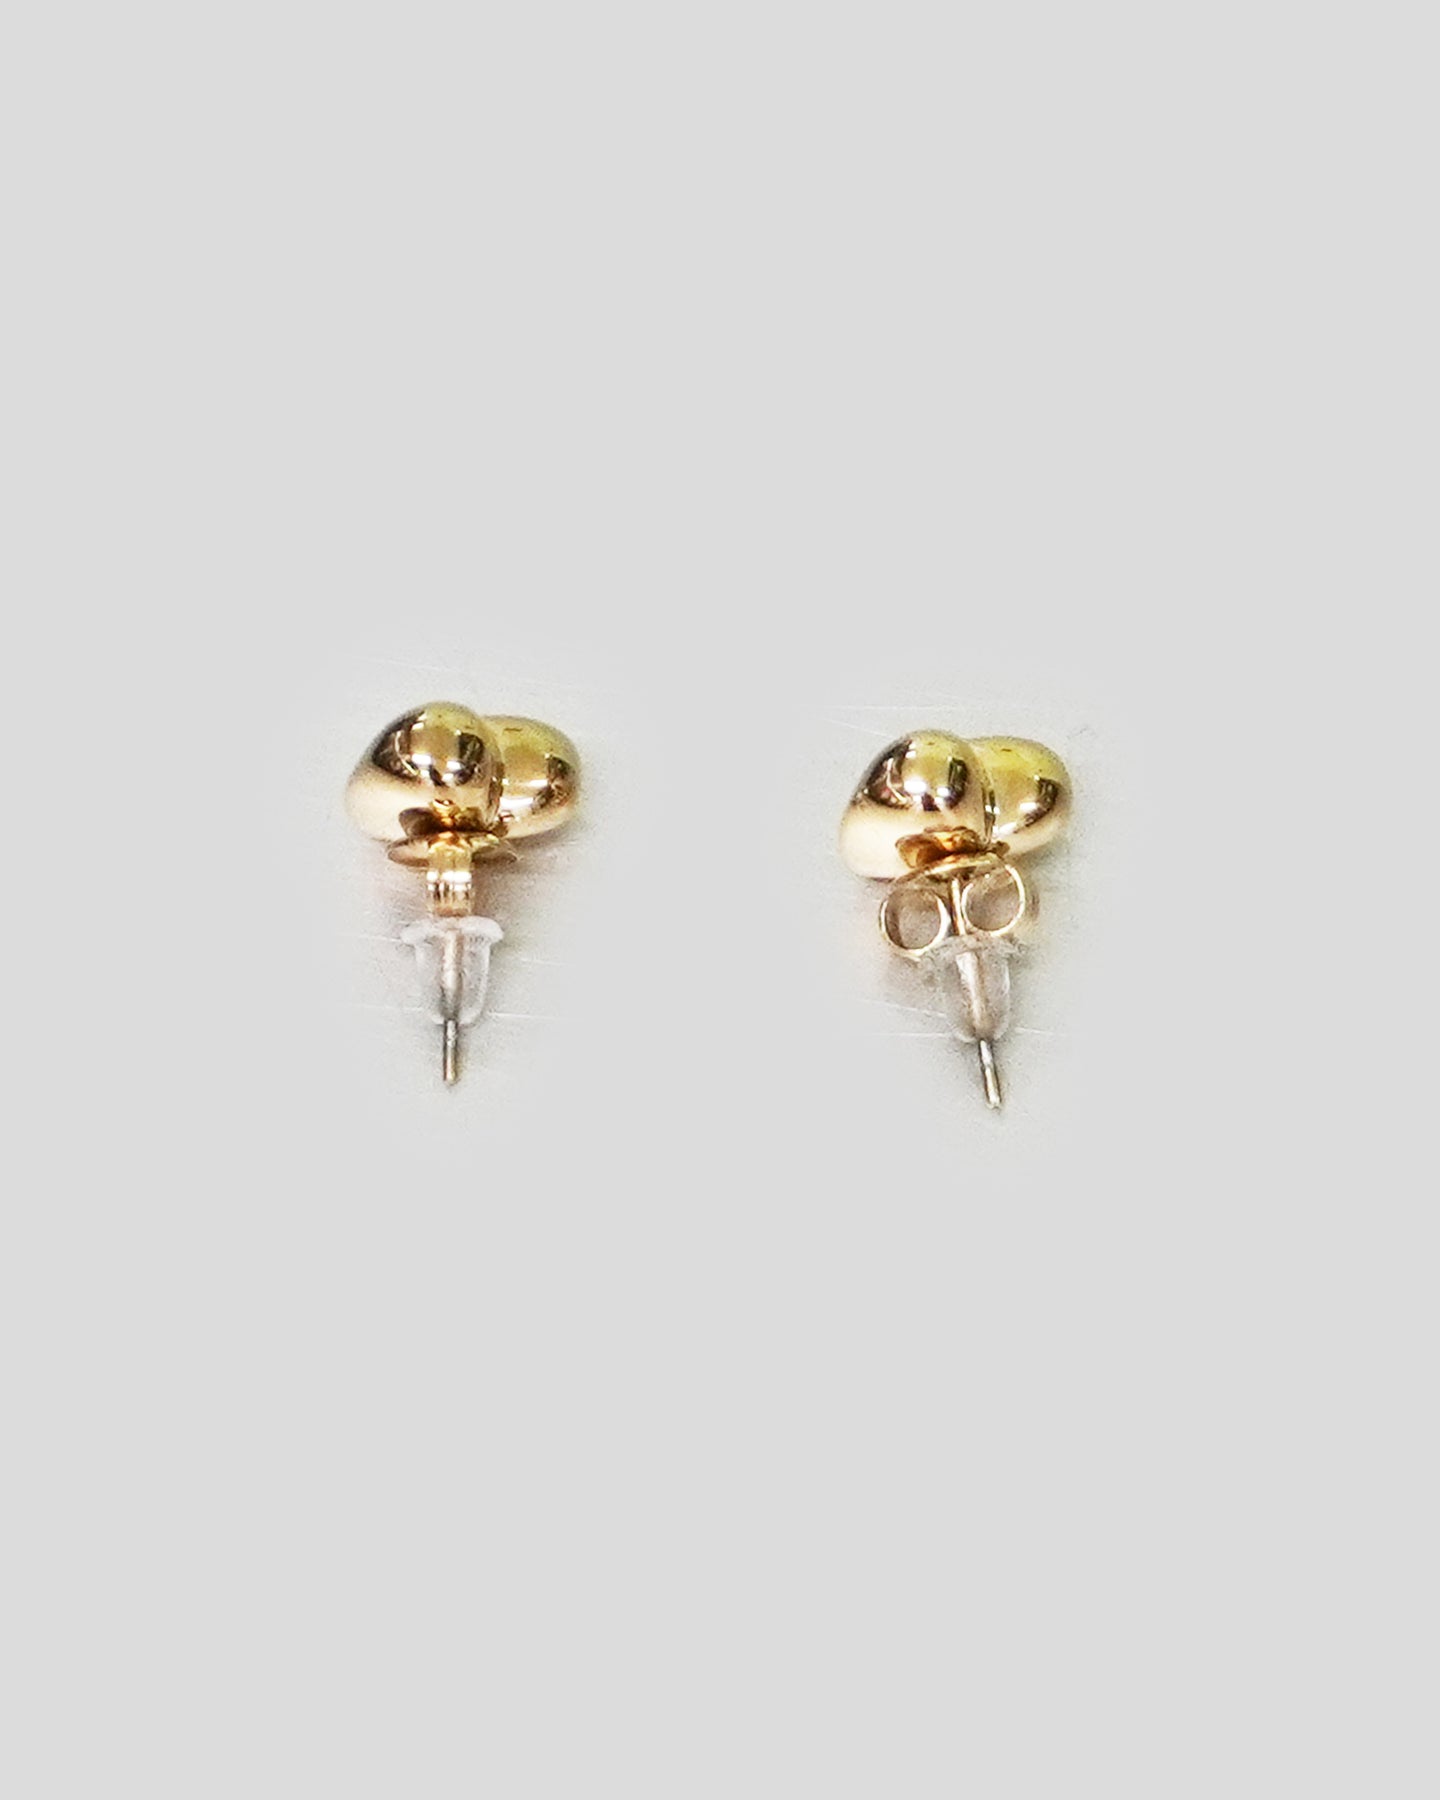 Marland Backus - Pair of Gold Heart Earrings